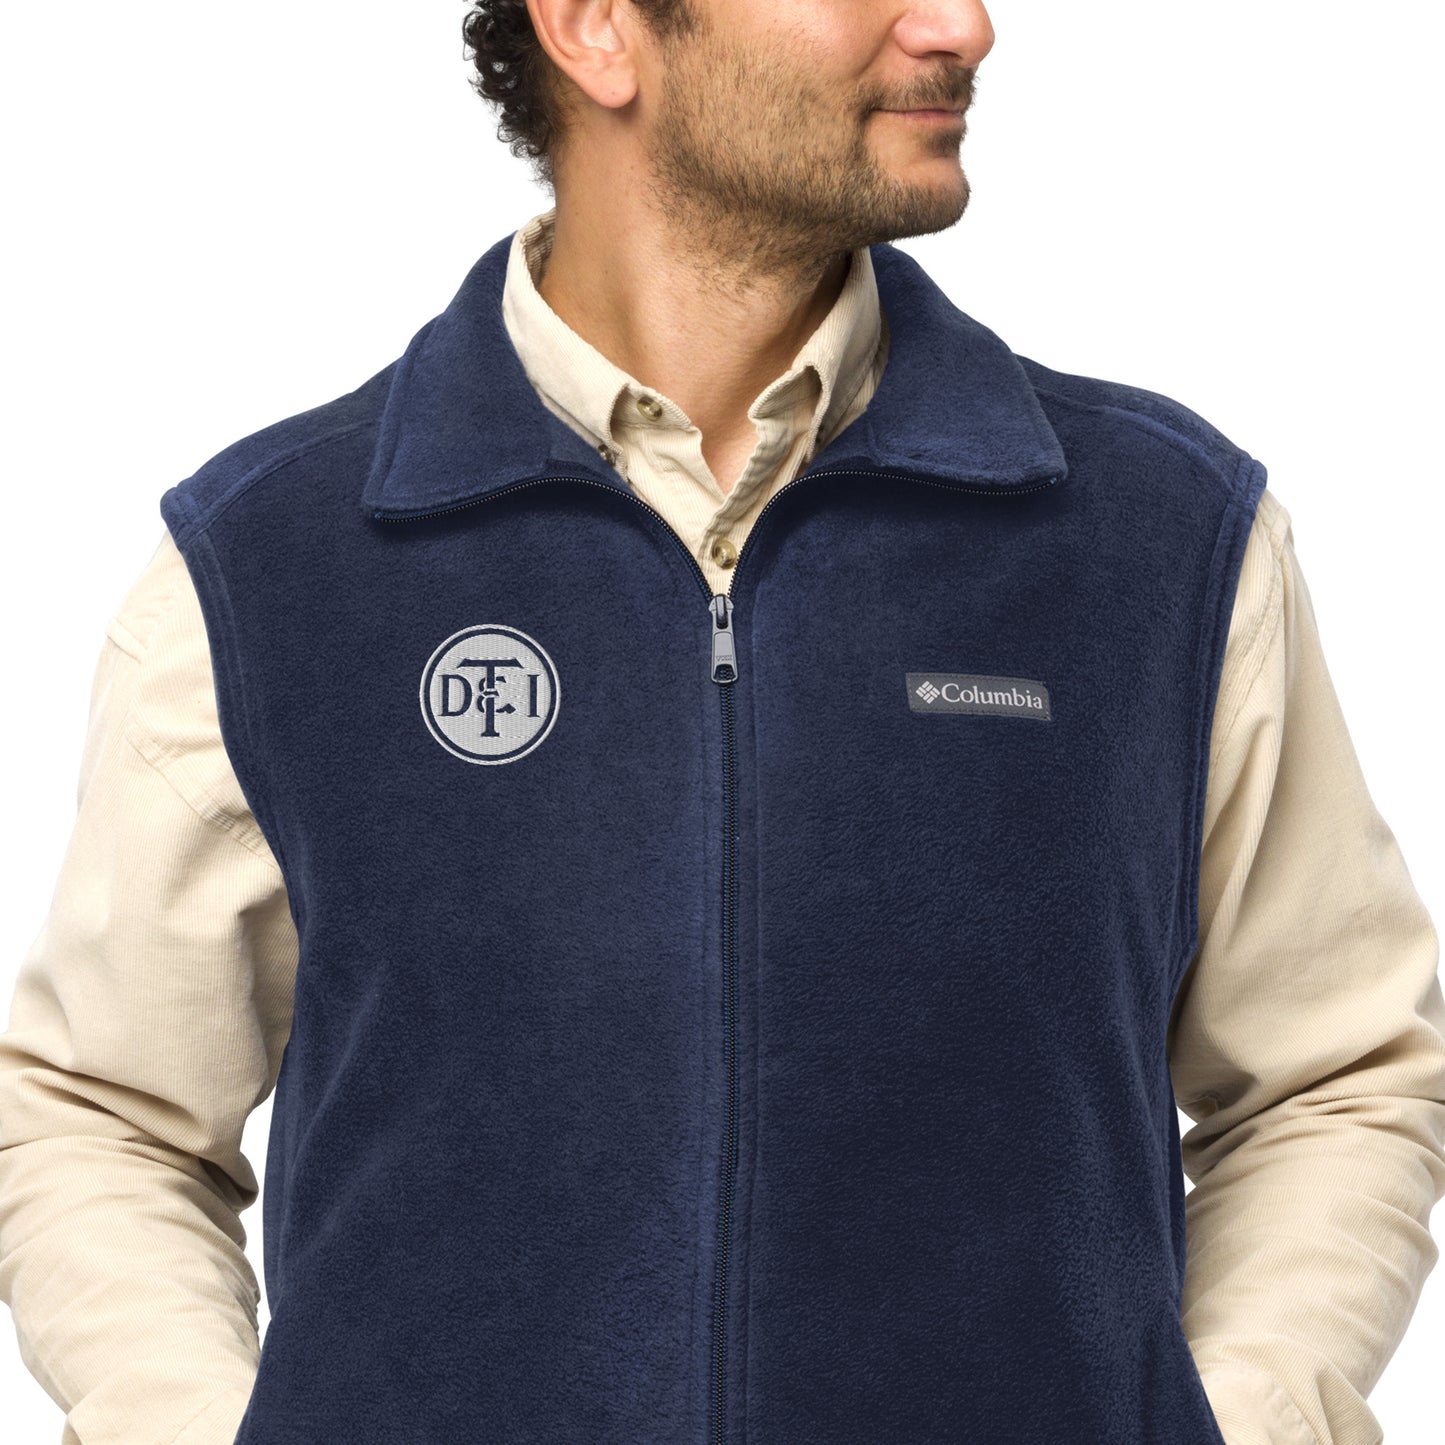 Detroit & Toledo Ironton [DT&I] Vintage White Logo Men’s Columbia fleece vest